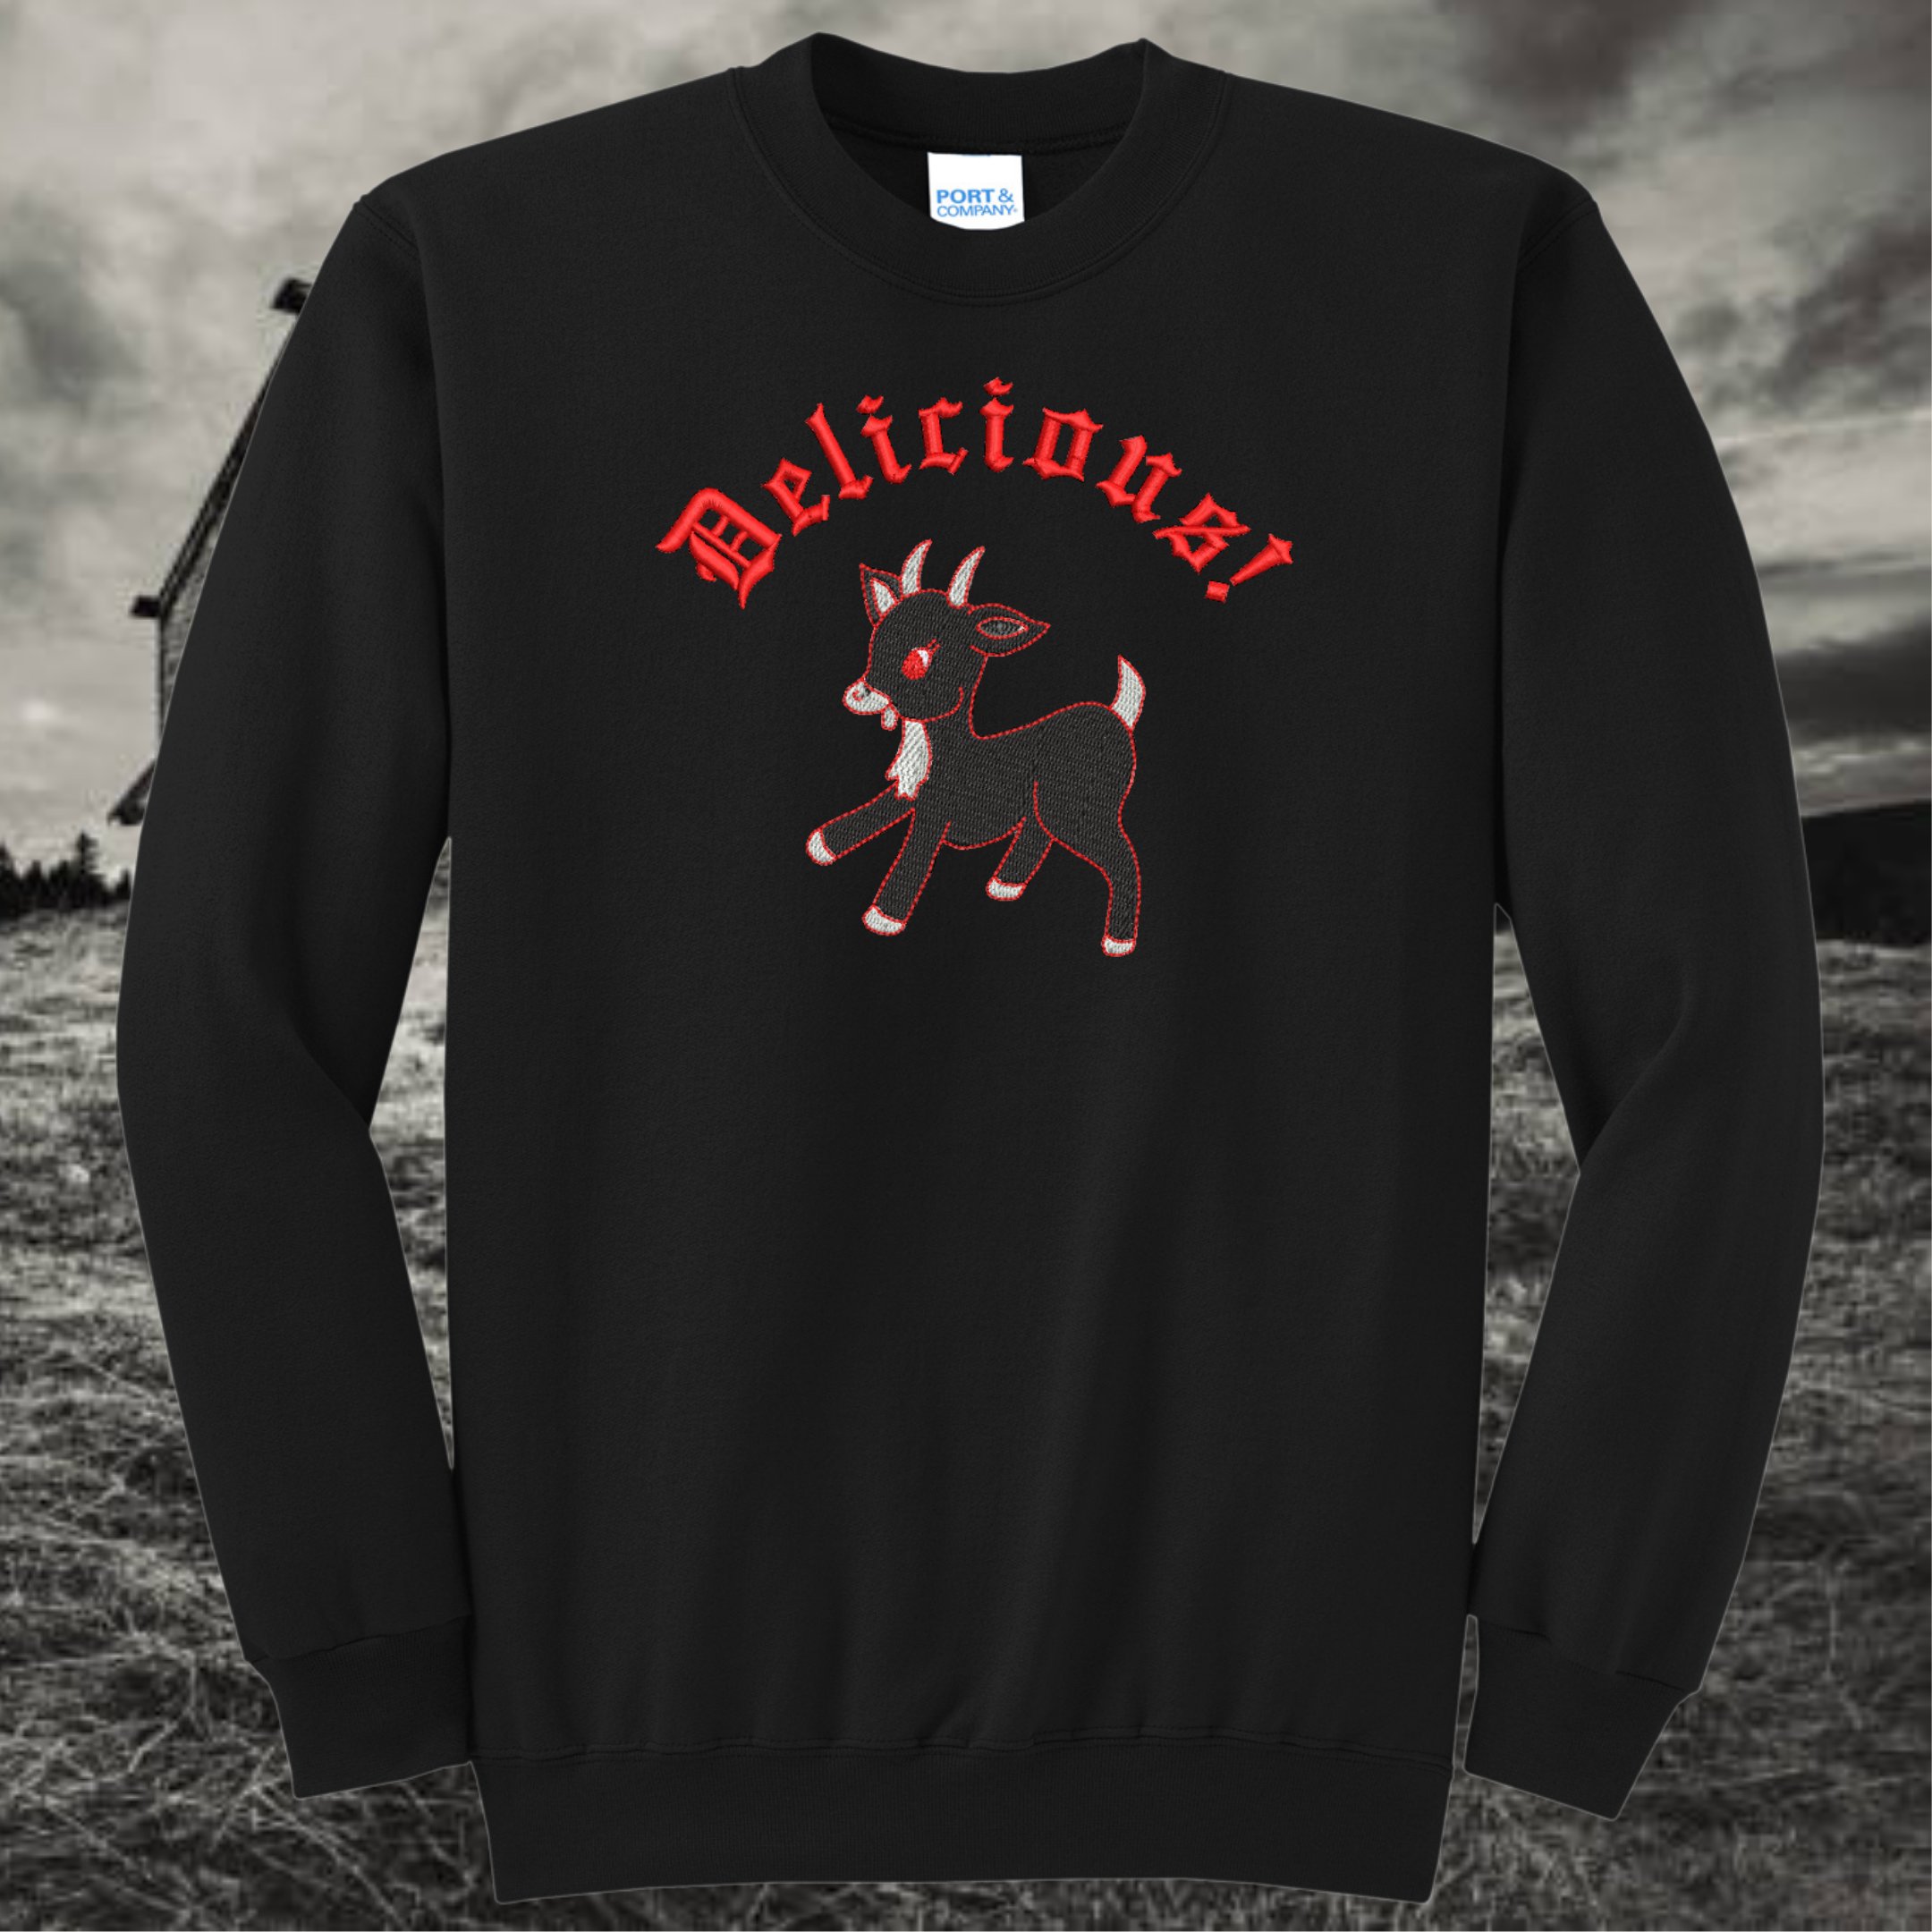 Delicious! Black Phillip VVitch Inspired Embroidered Crewneck Sweatshirt, Black, Unisex